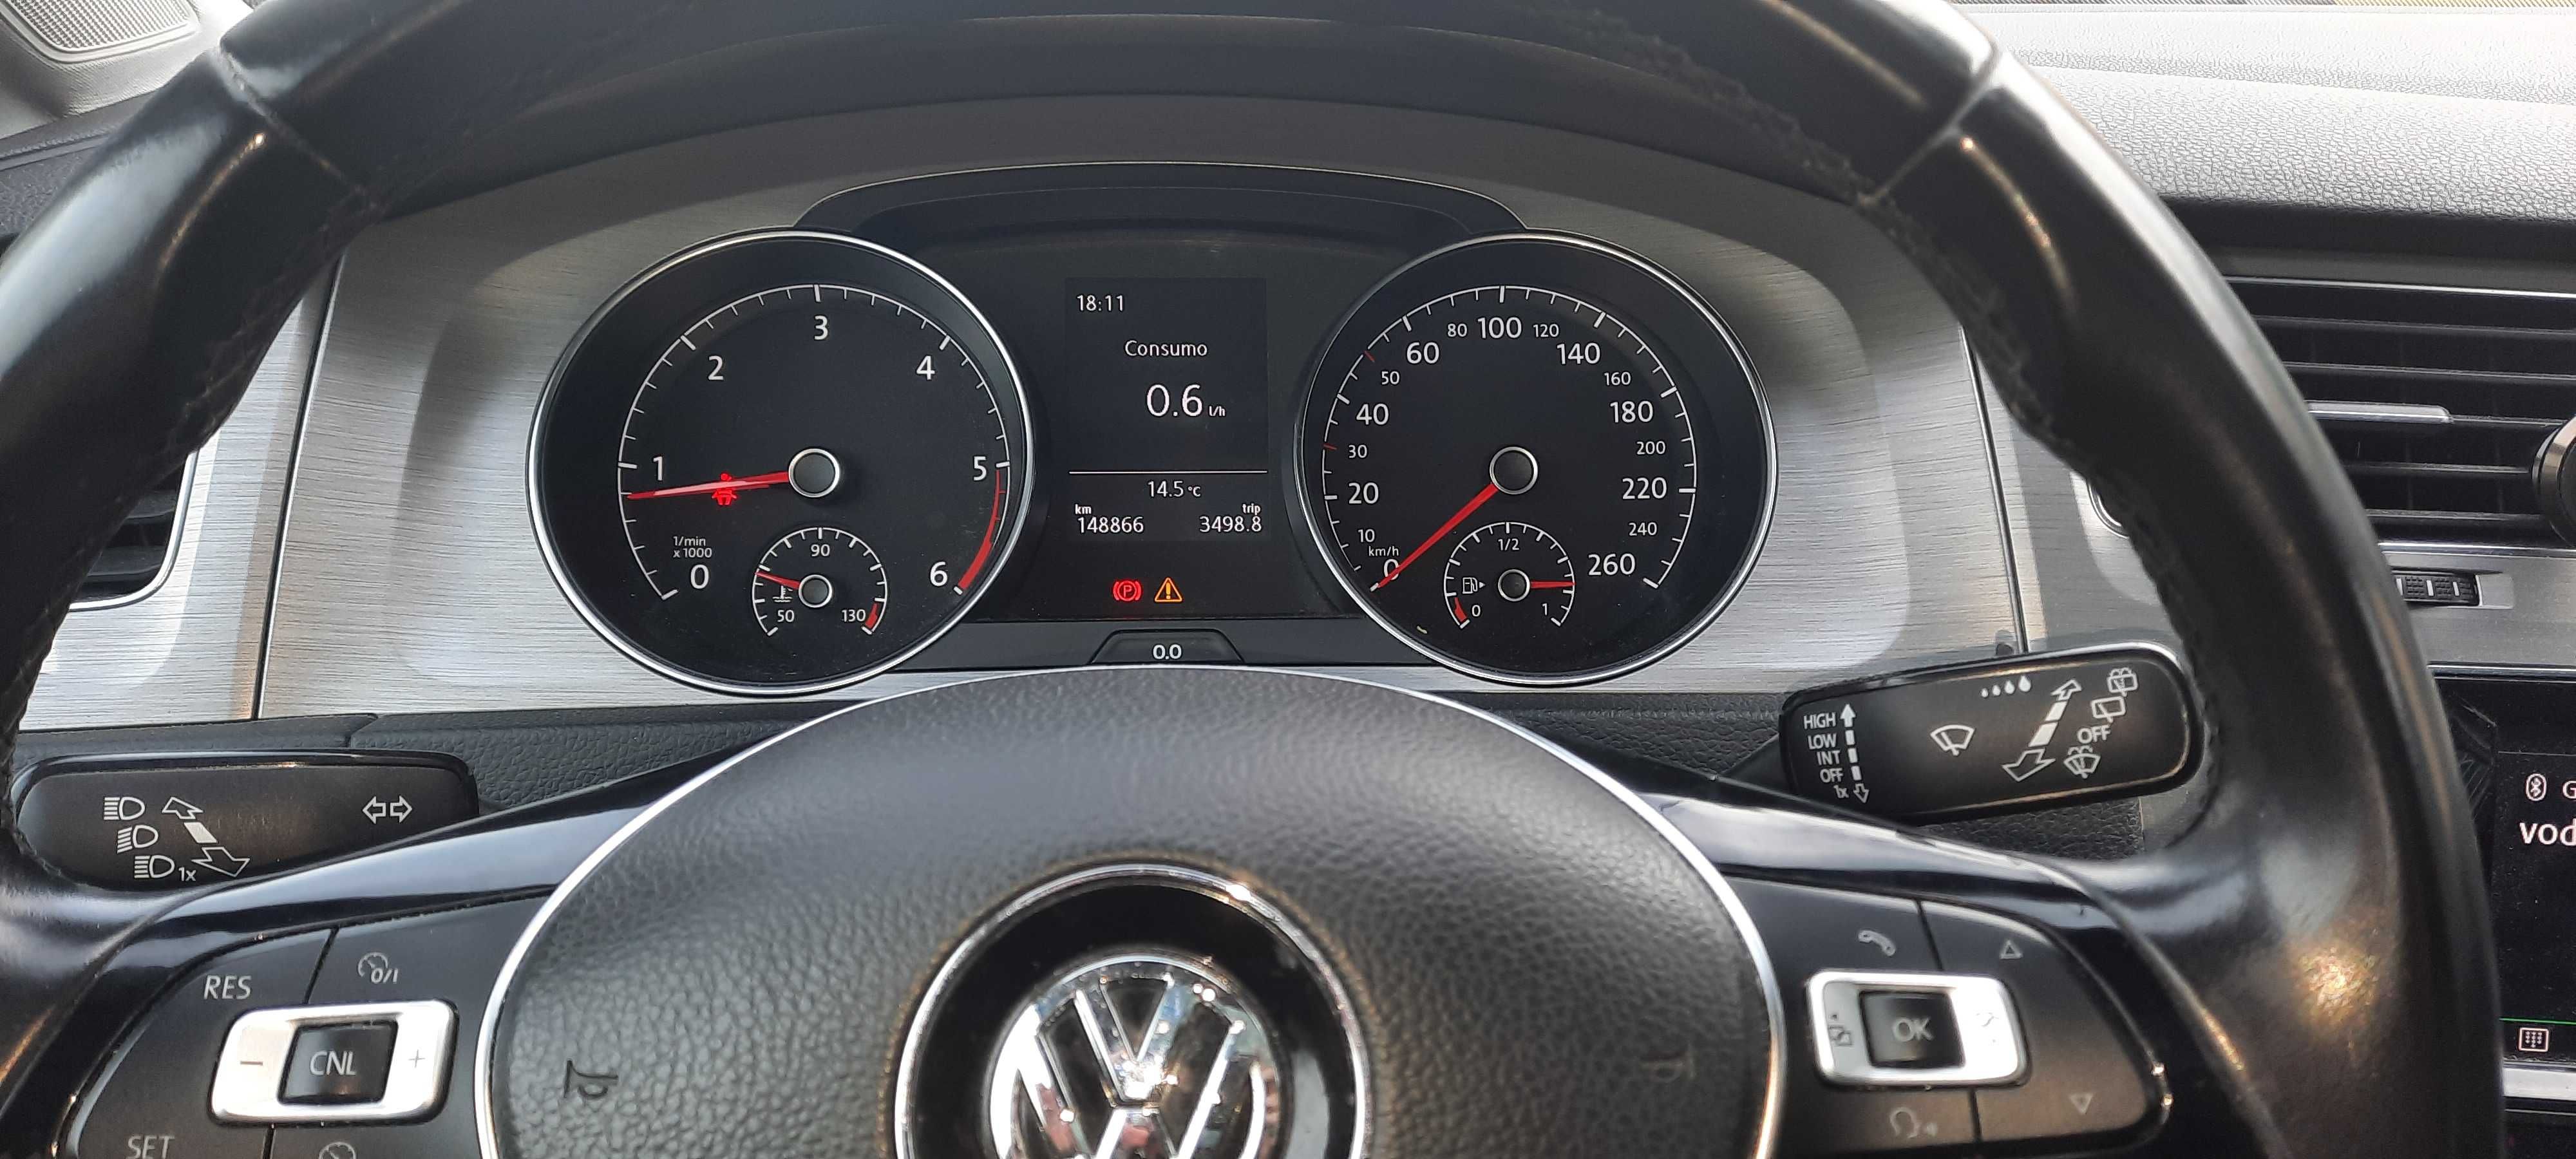 VW GOLF Variant 1.6 Tdi 5P